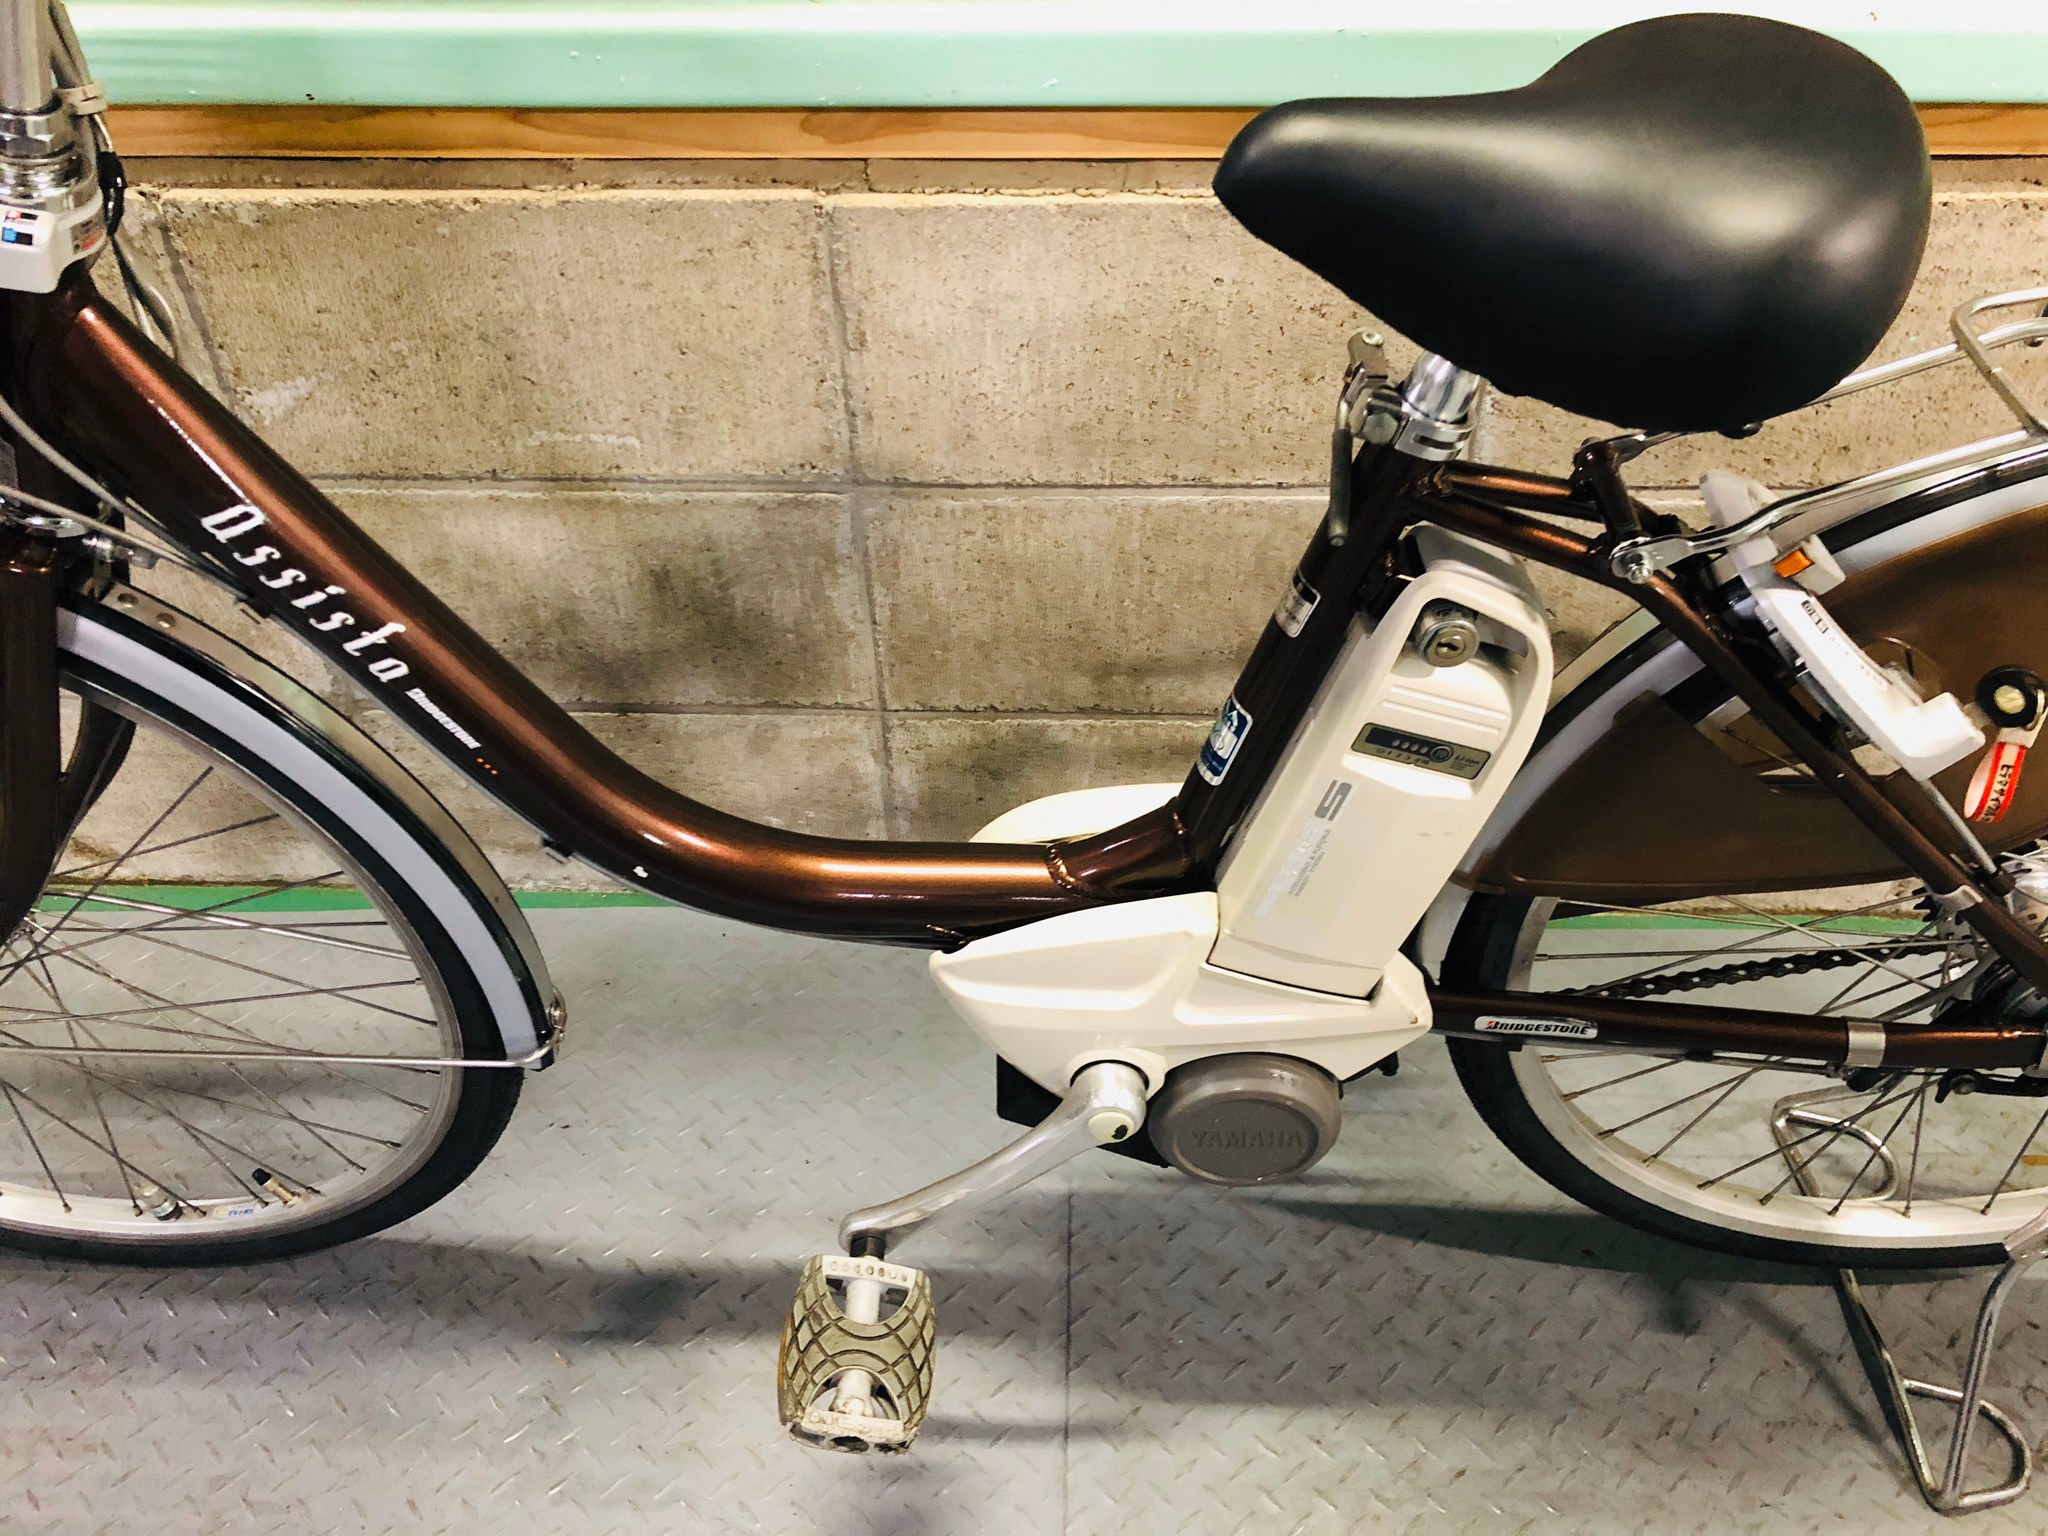 【SOLD OUT】電動自転車 ブリヂストン Assista アシスタ 24インチ ブラウン | 国産・中古の激安電動アシスト自転車を販売